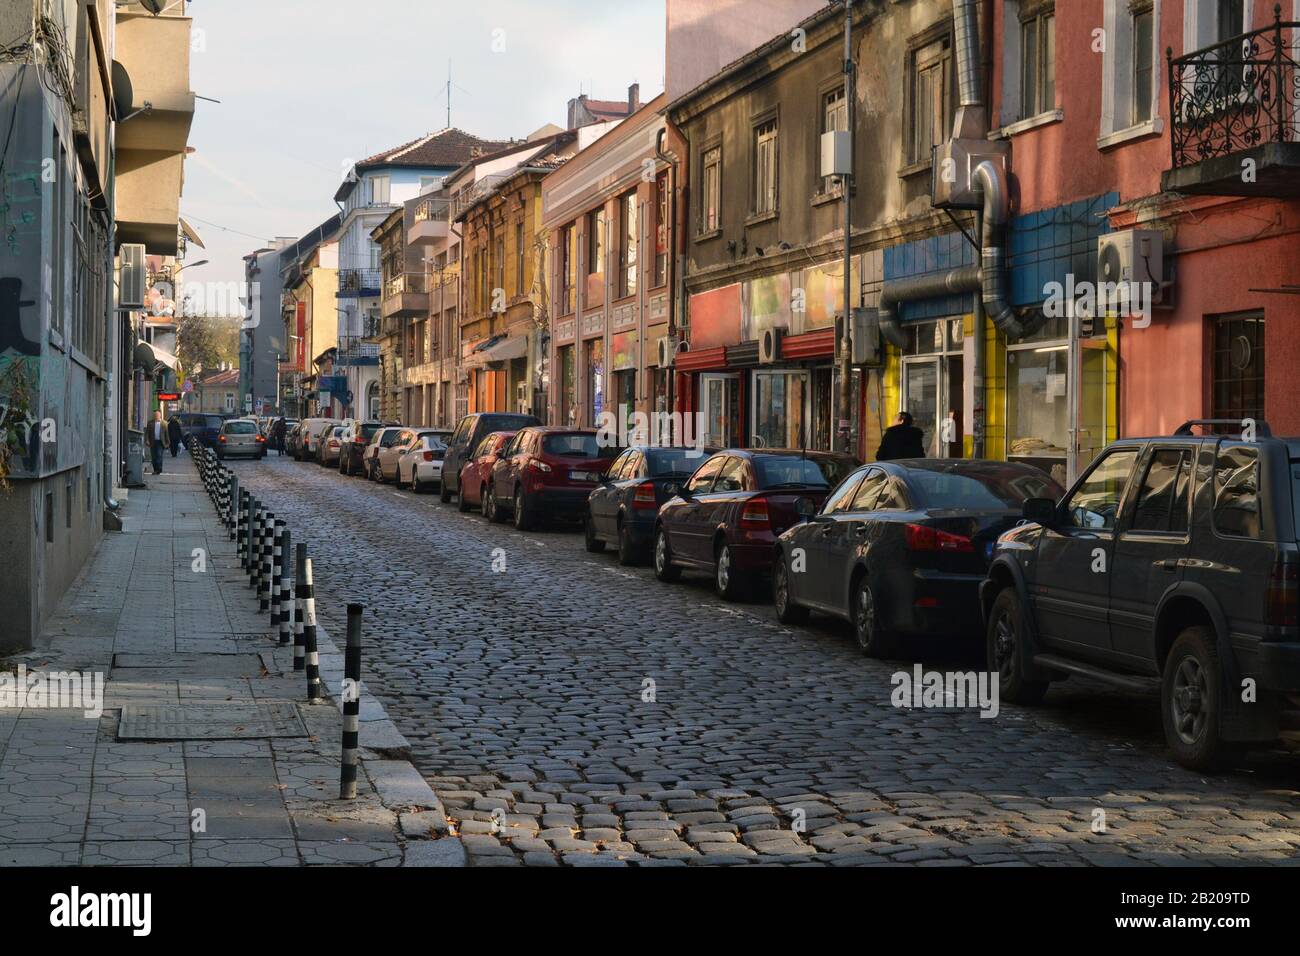 Zentrale gepflasterte Straße in Sofia, der Hauptstadt Bulgariens. Stockfoto